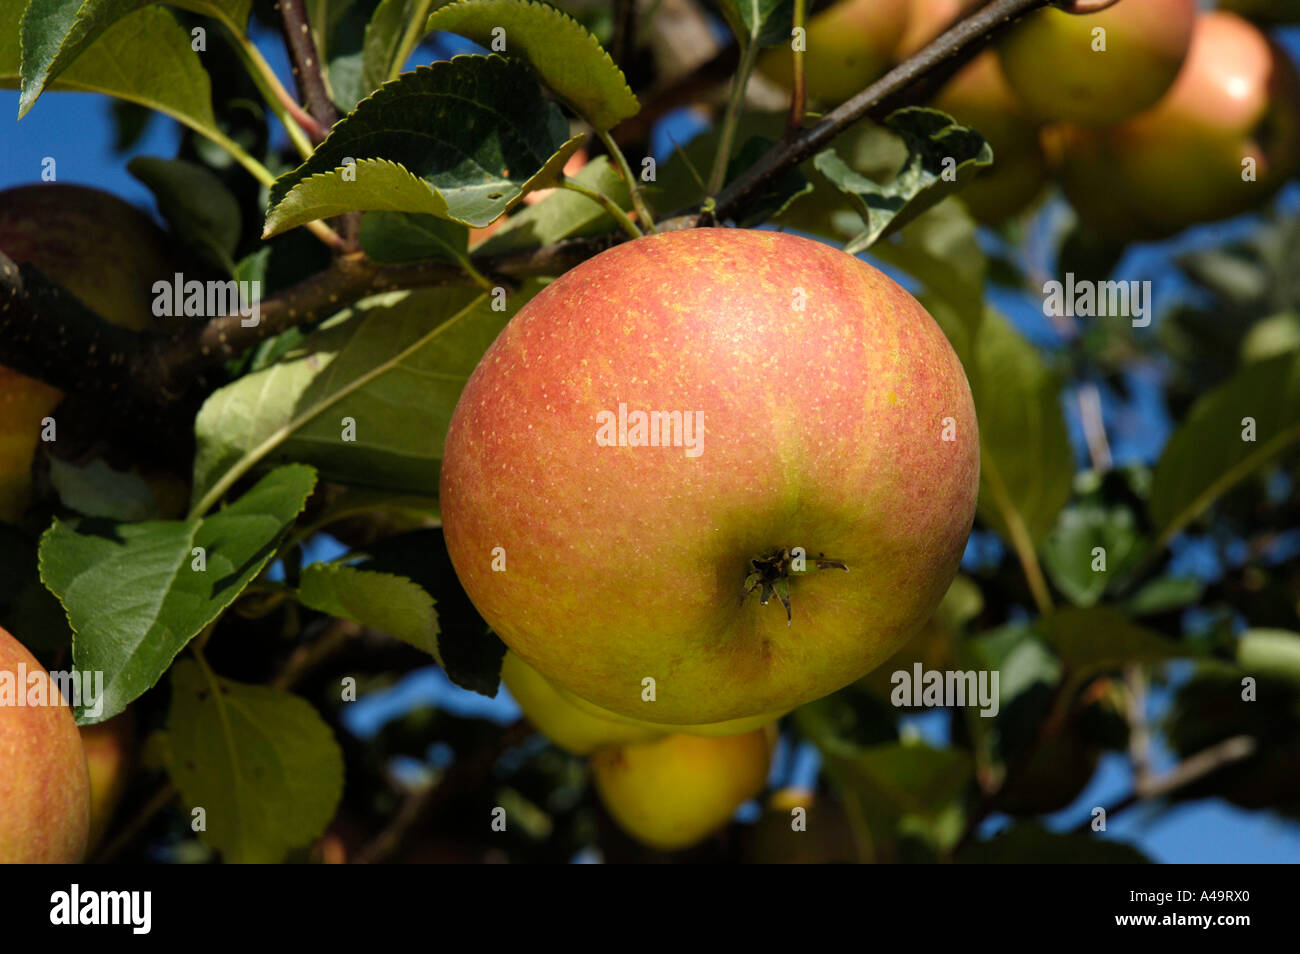 Apple / Rubinette Stock Photo